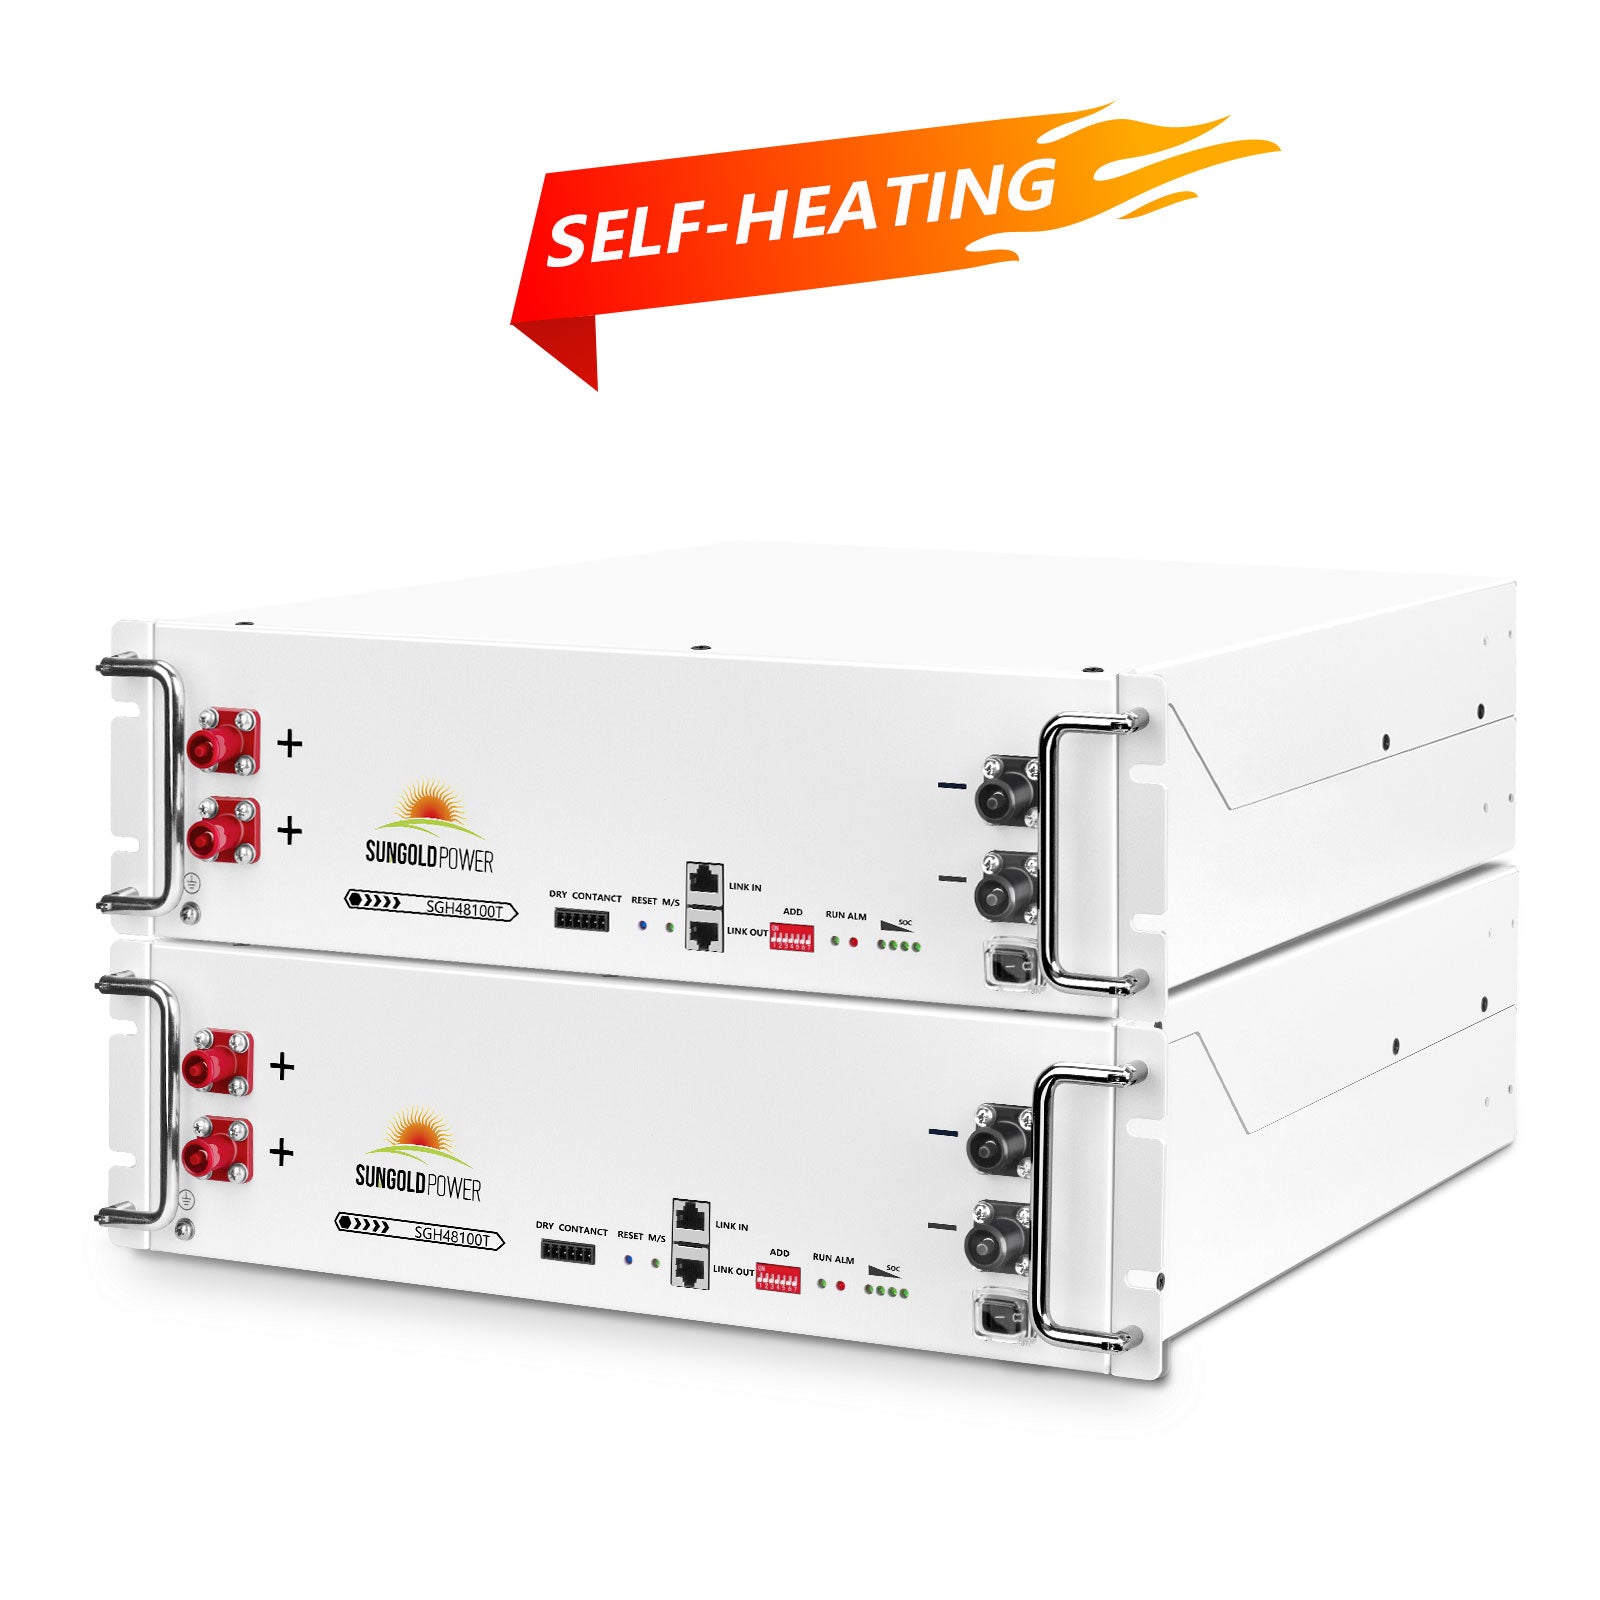 2X SGH48100T Server Rack 48V 100AH Lithium Battery Self-Heating